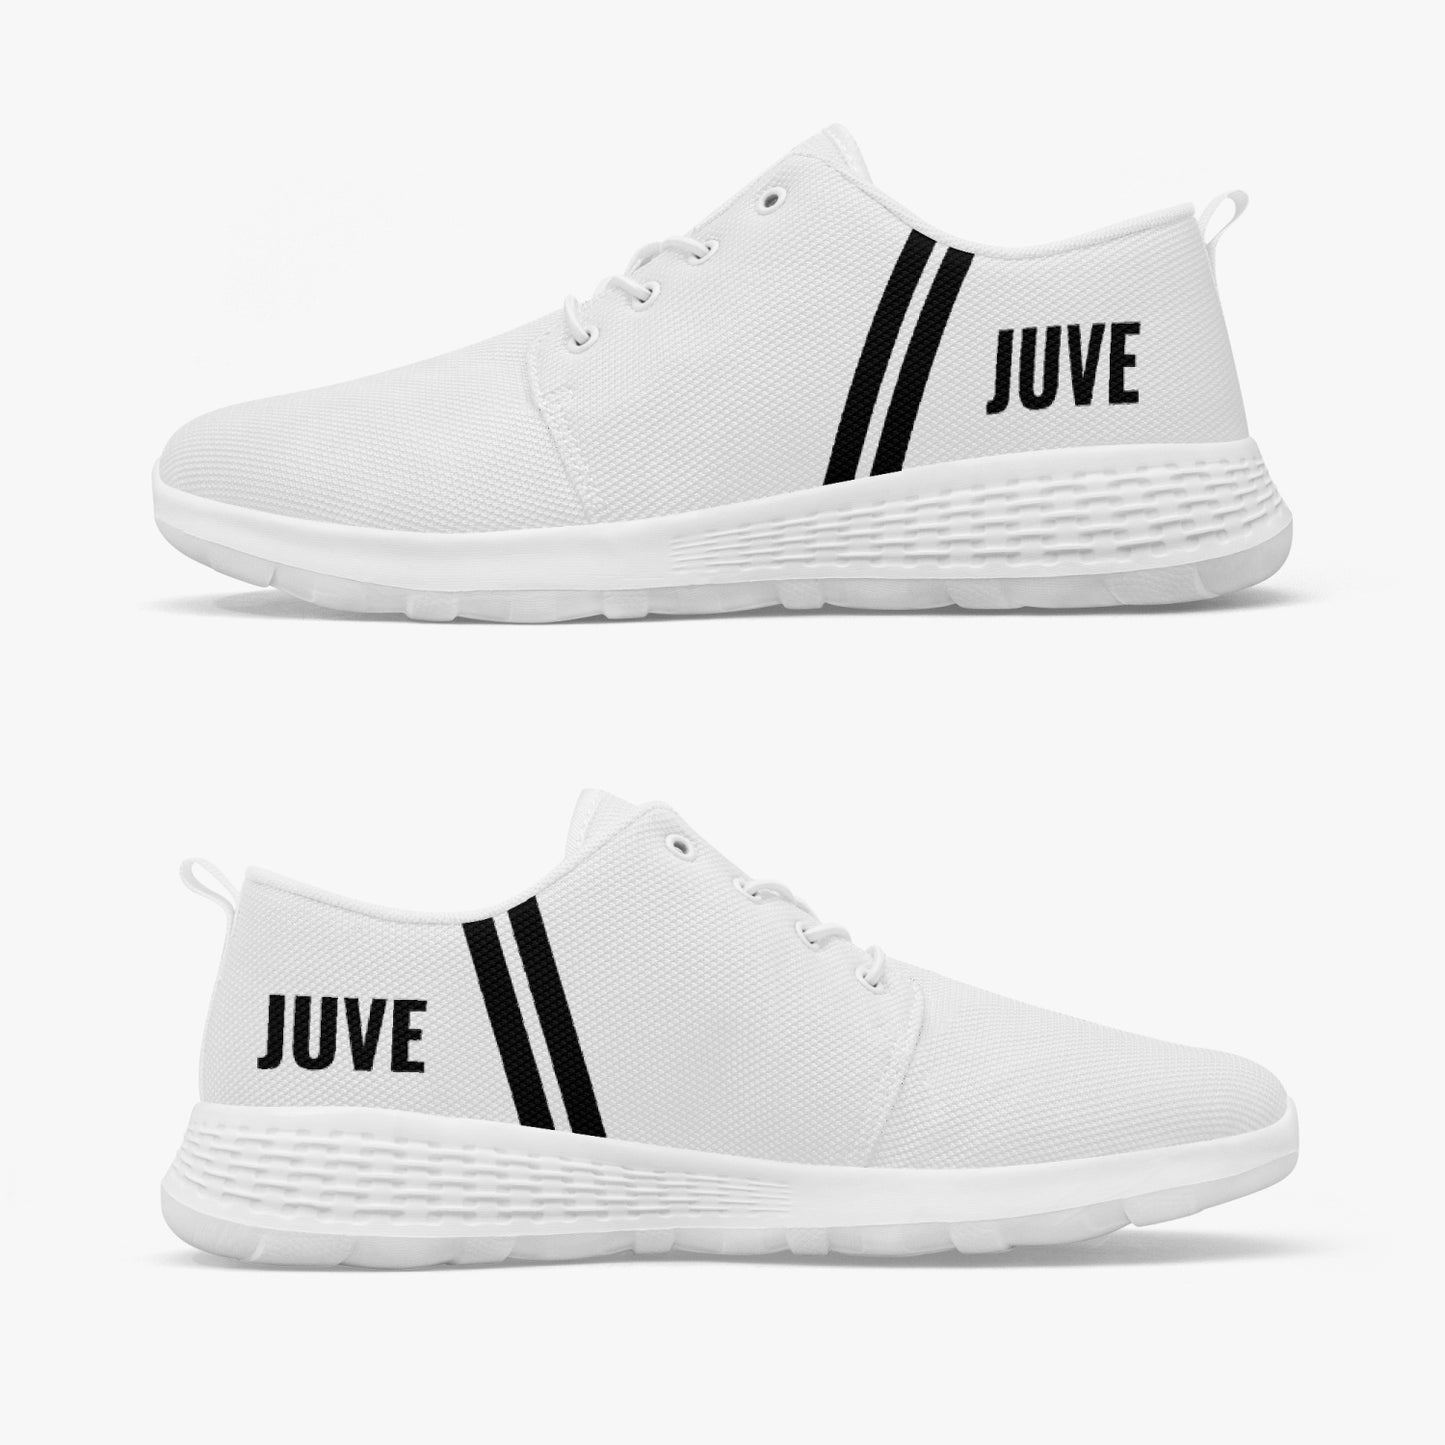 Juve Running Shoes - men's /women's sizes